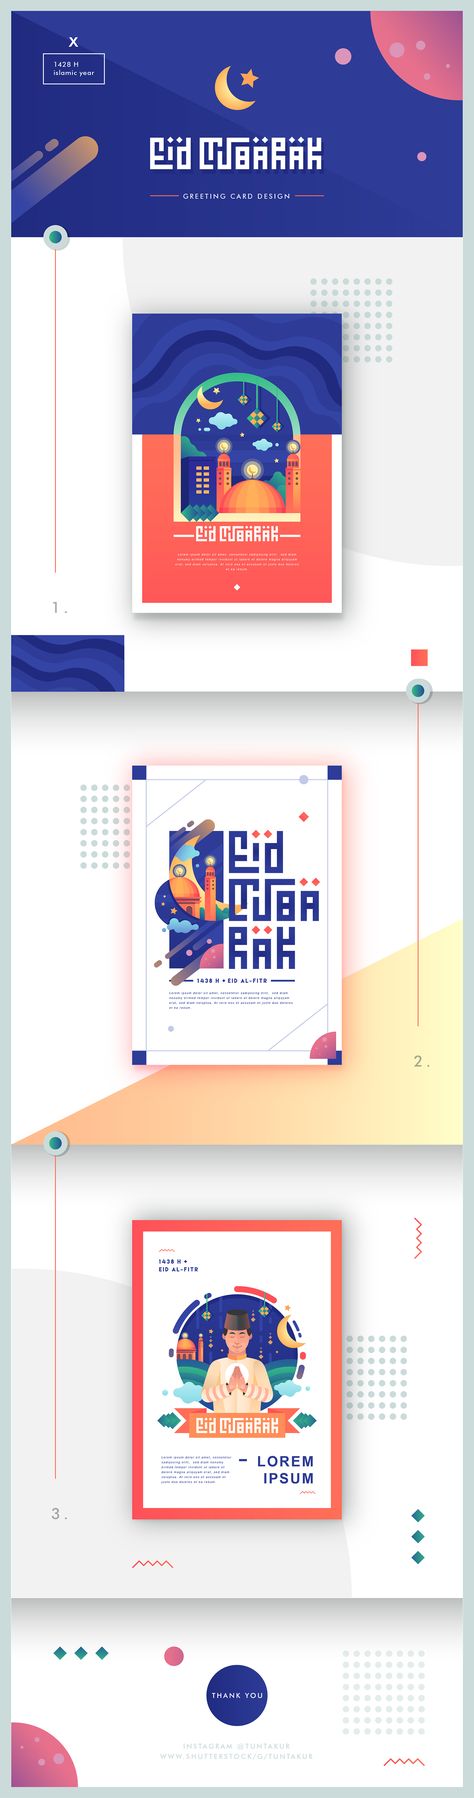 EID MUBARAK GREETING CARD DESIGN 2017 on Behance Ramadan, Web Layout, Design, Presentation Layout, Ideas, Logos, Layout Design, Behance, Web Design